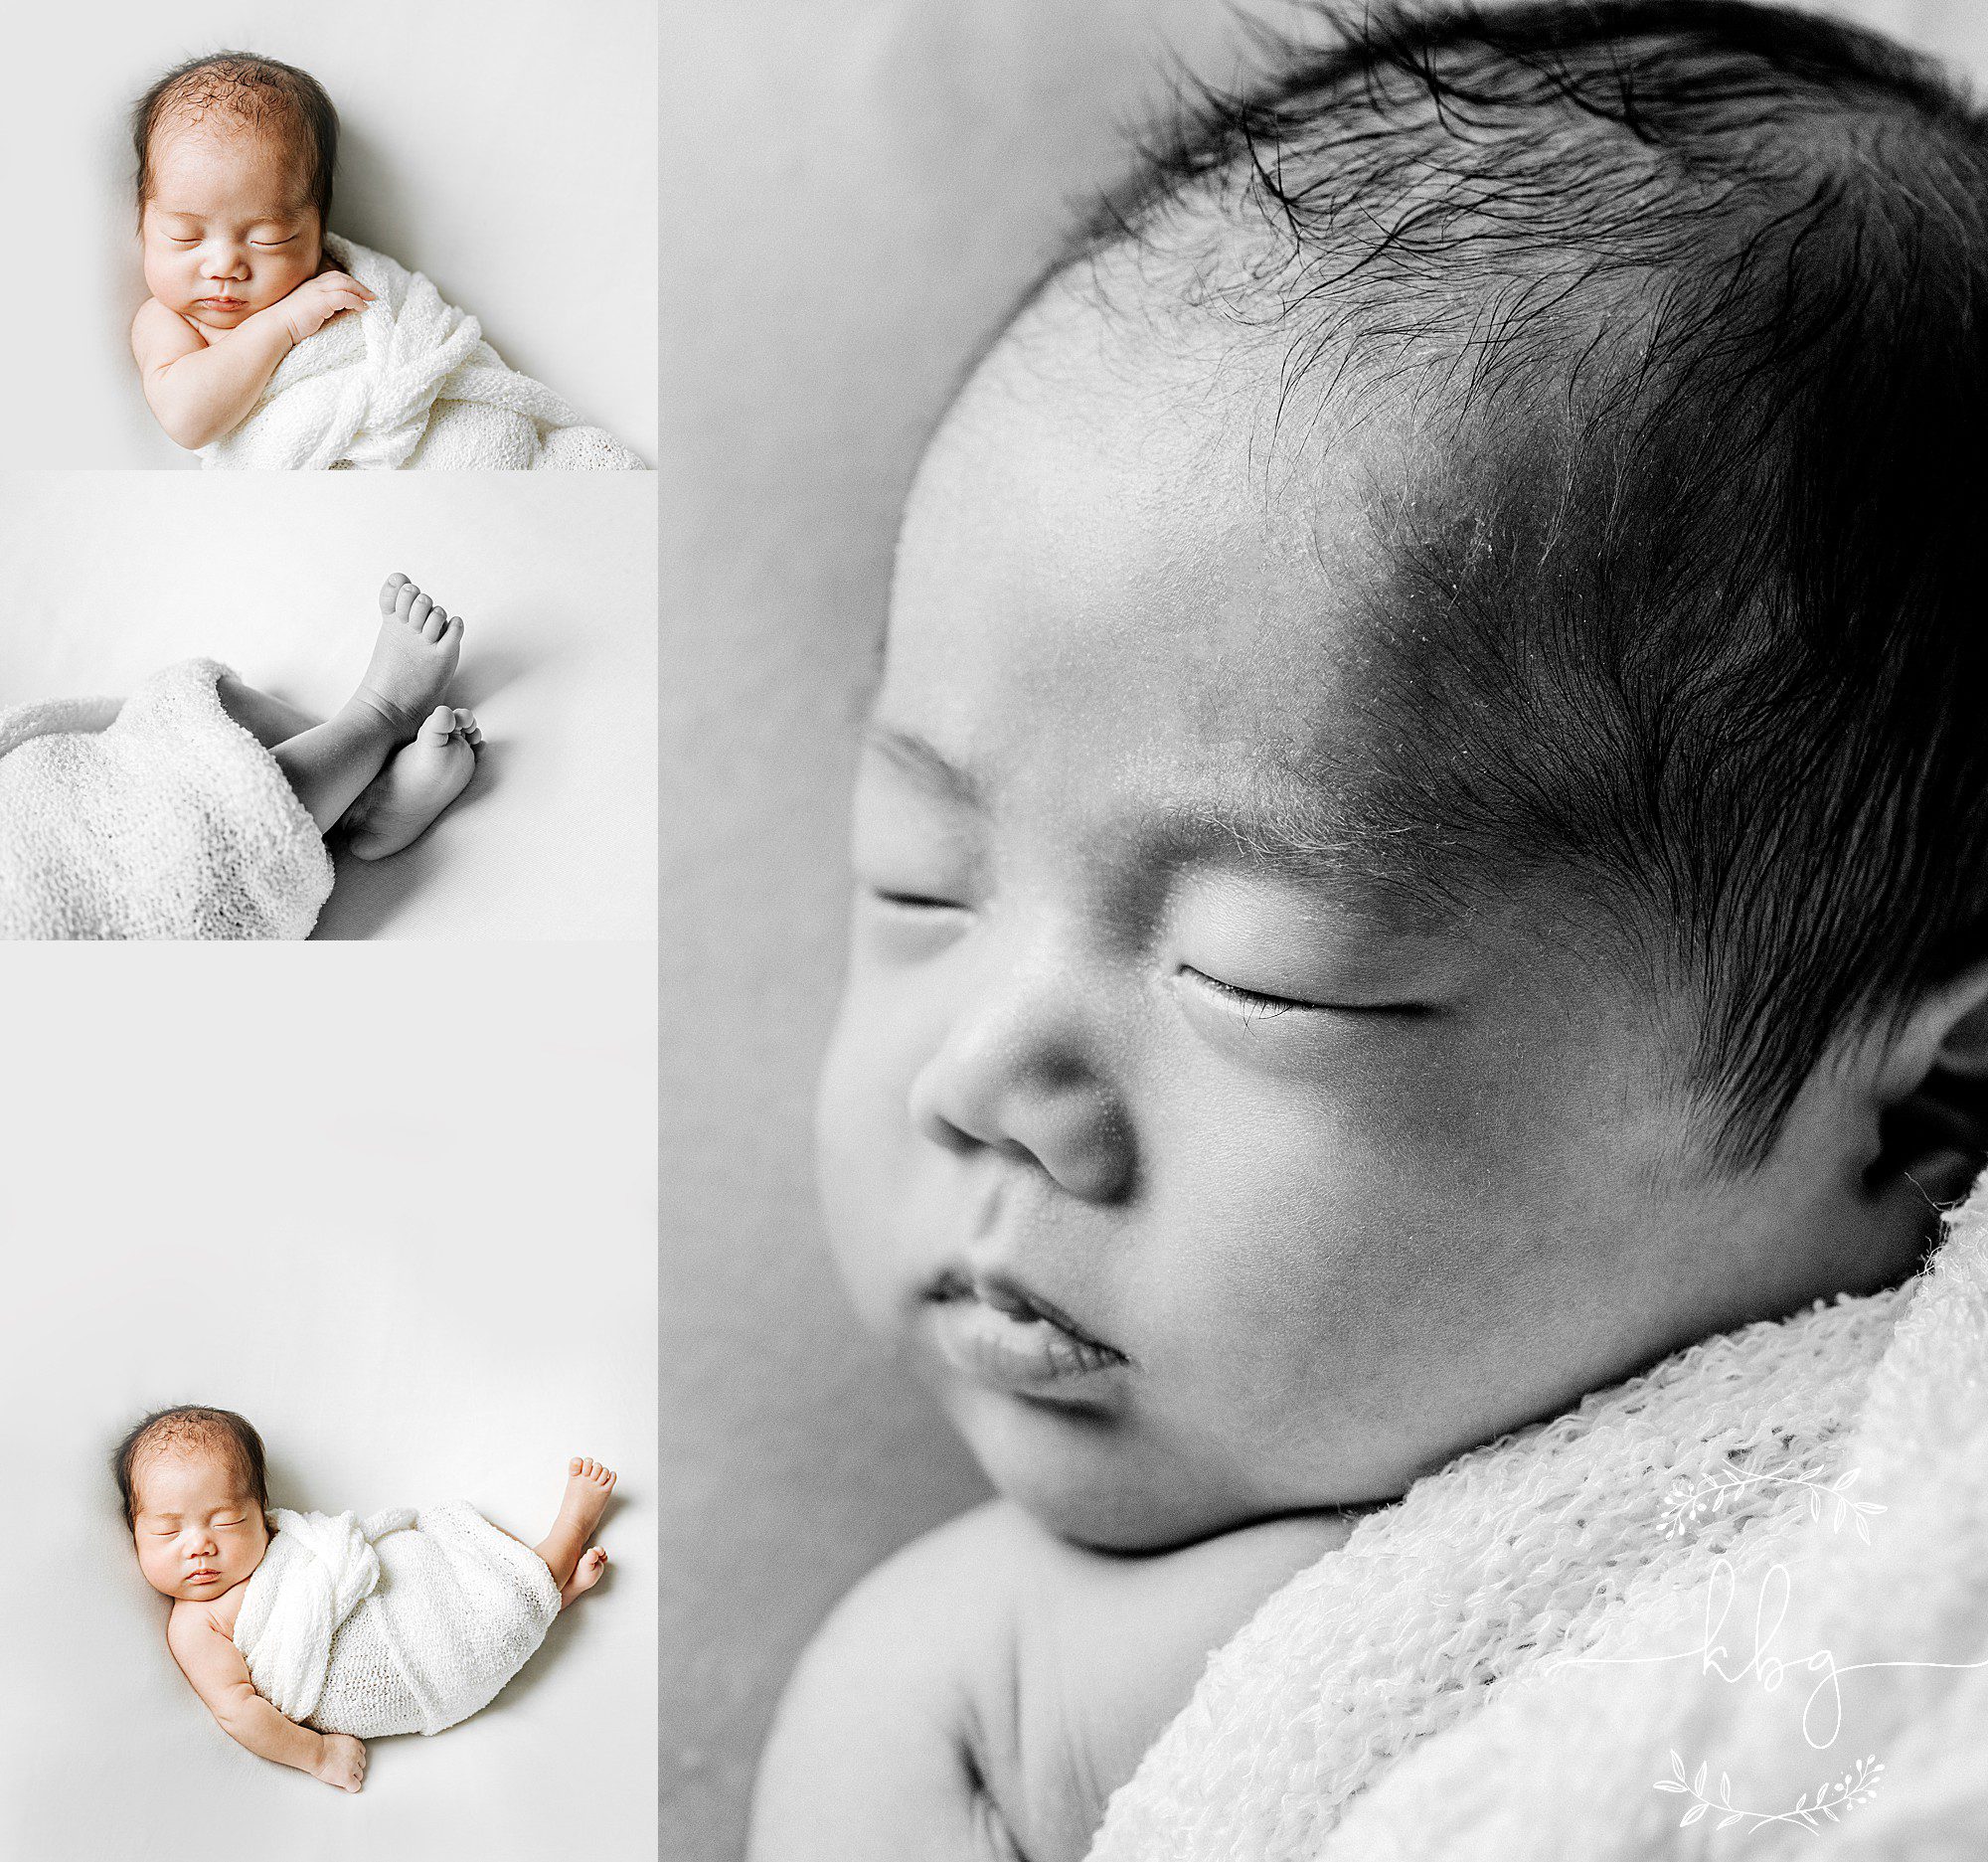 smyrna newborn session - single newborn boy on white background